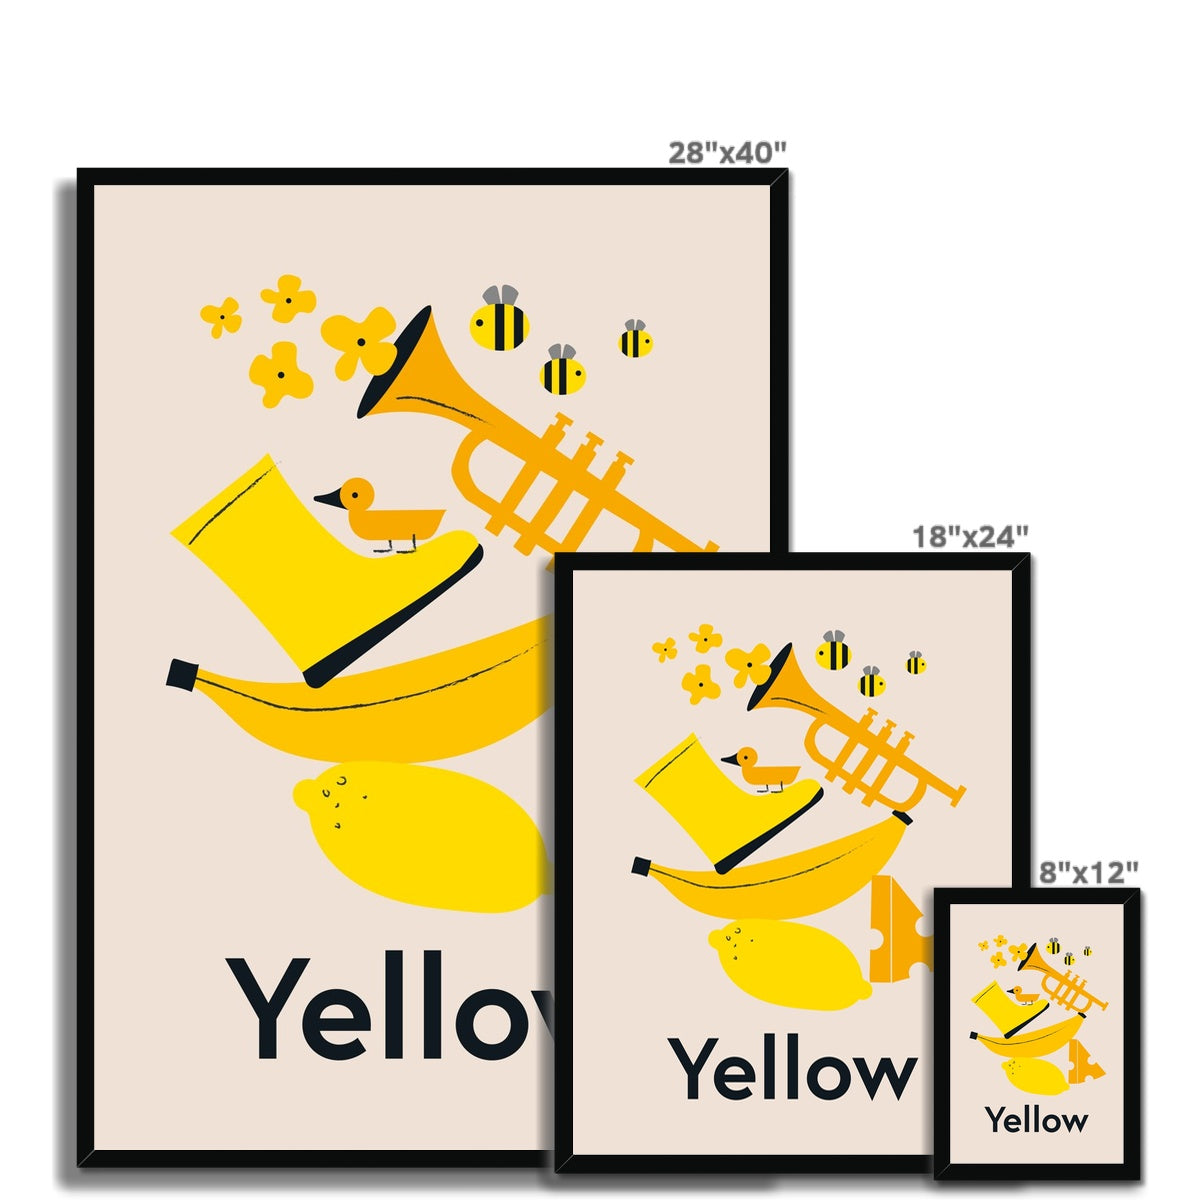 Favourite Colour Yellow Framed Fine Art Print